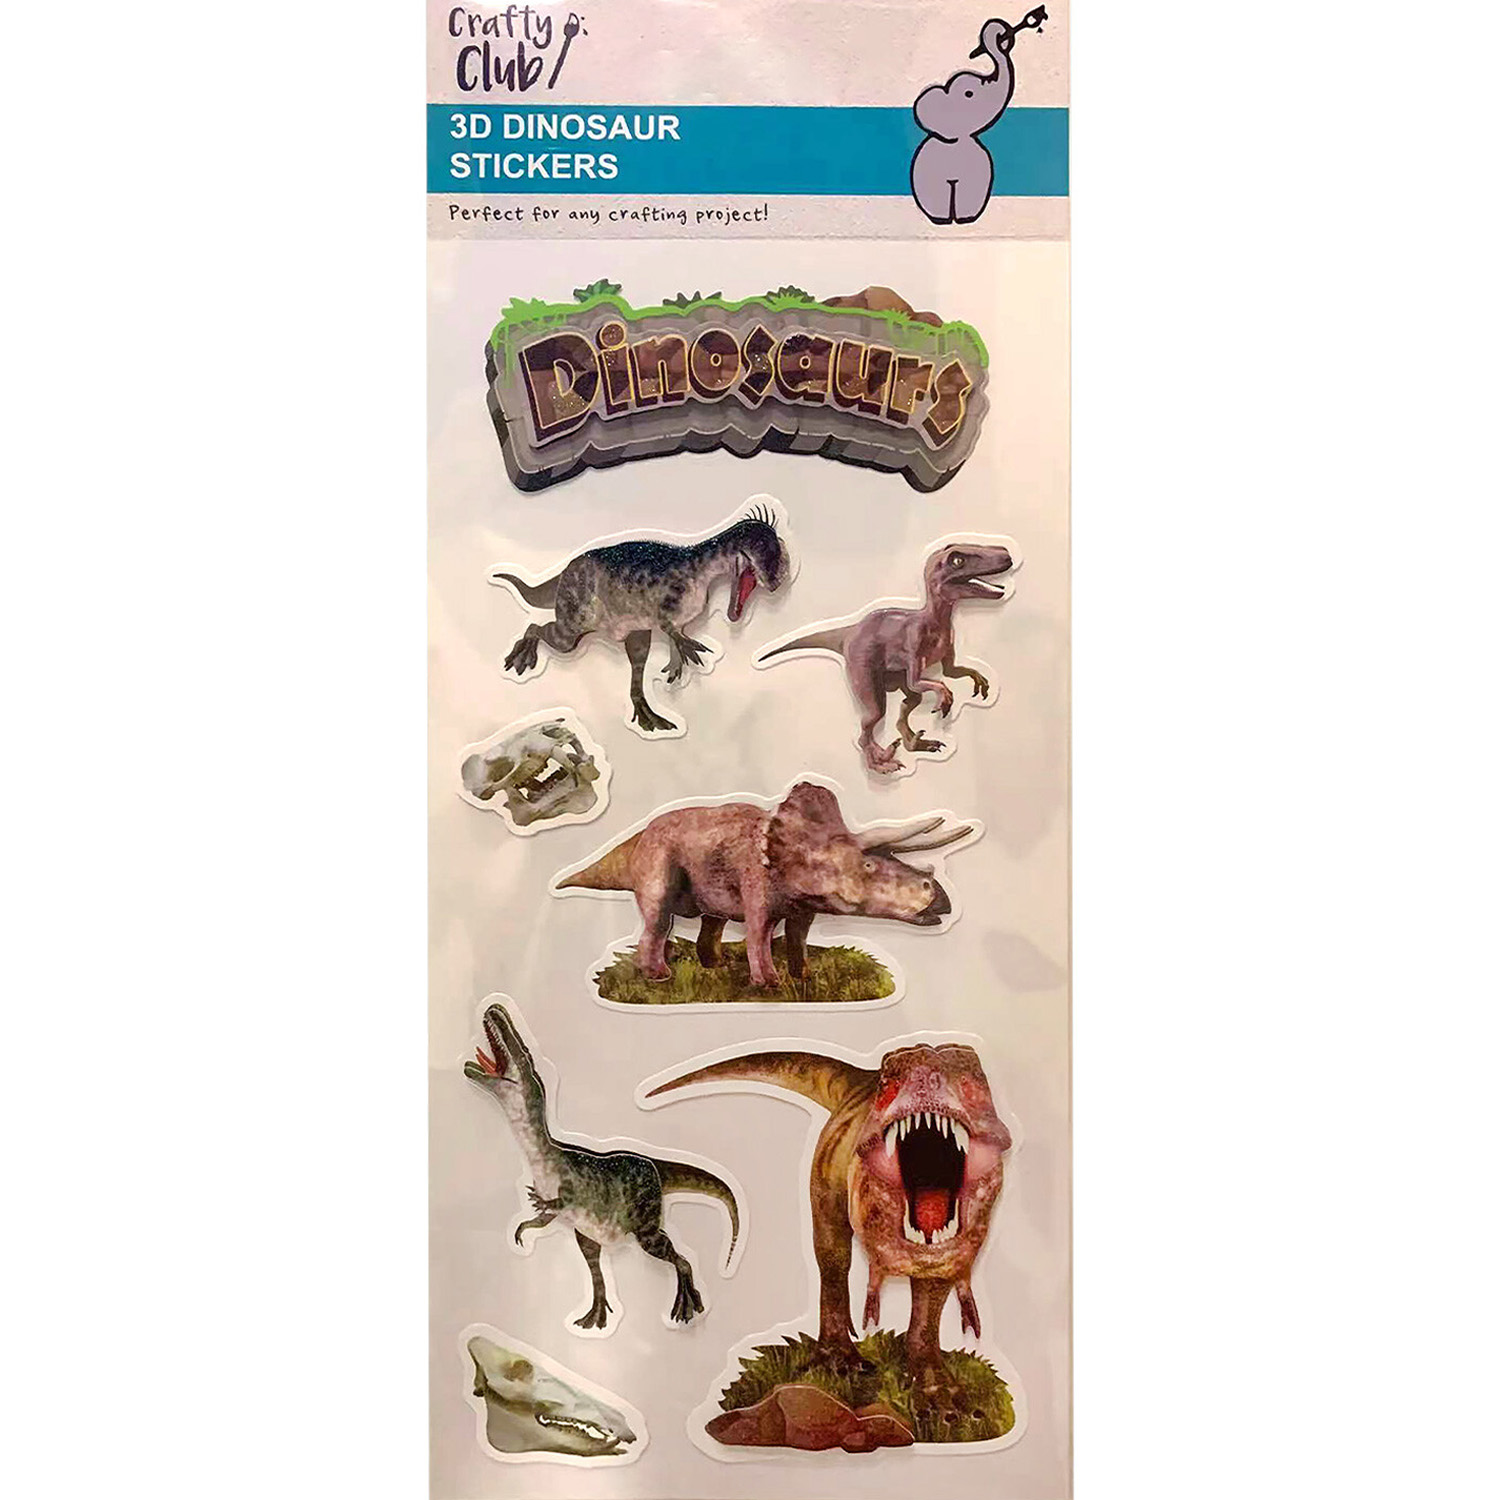 Crafty Club 3D Dinosaur Stickers Image